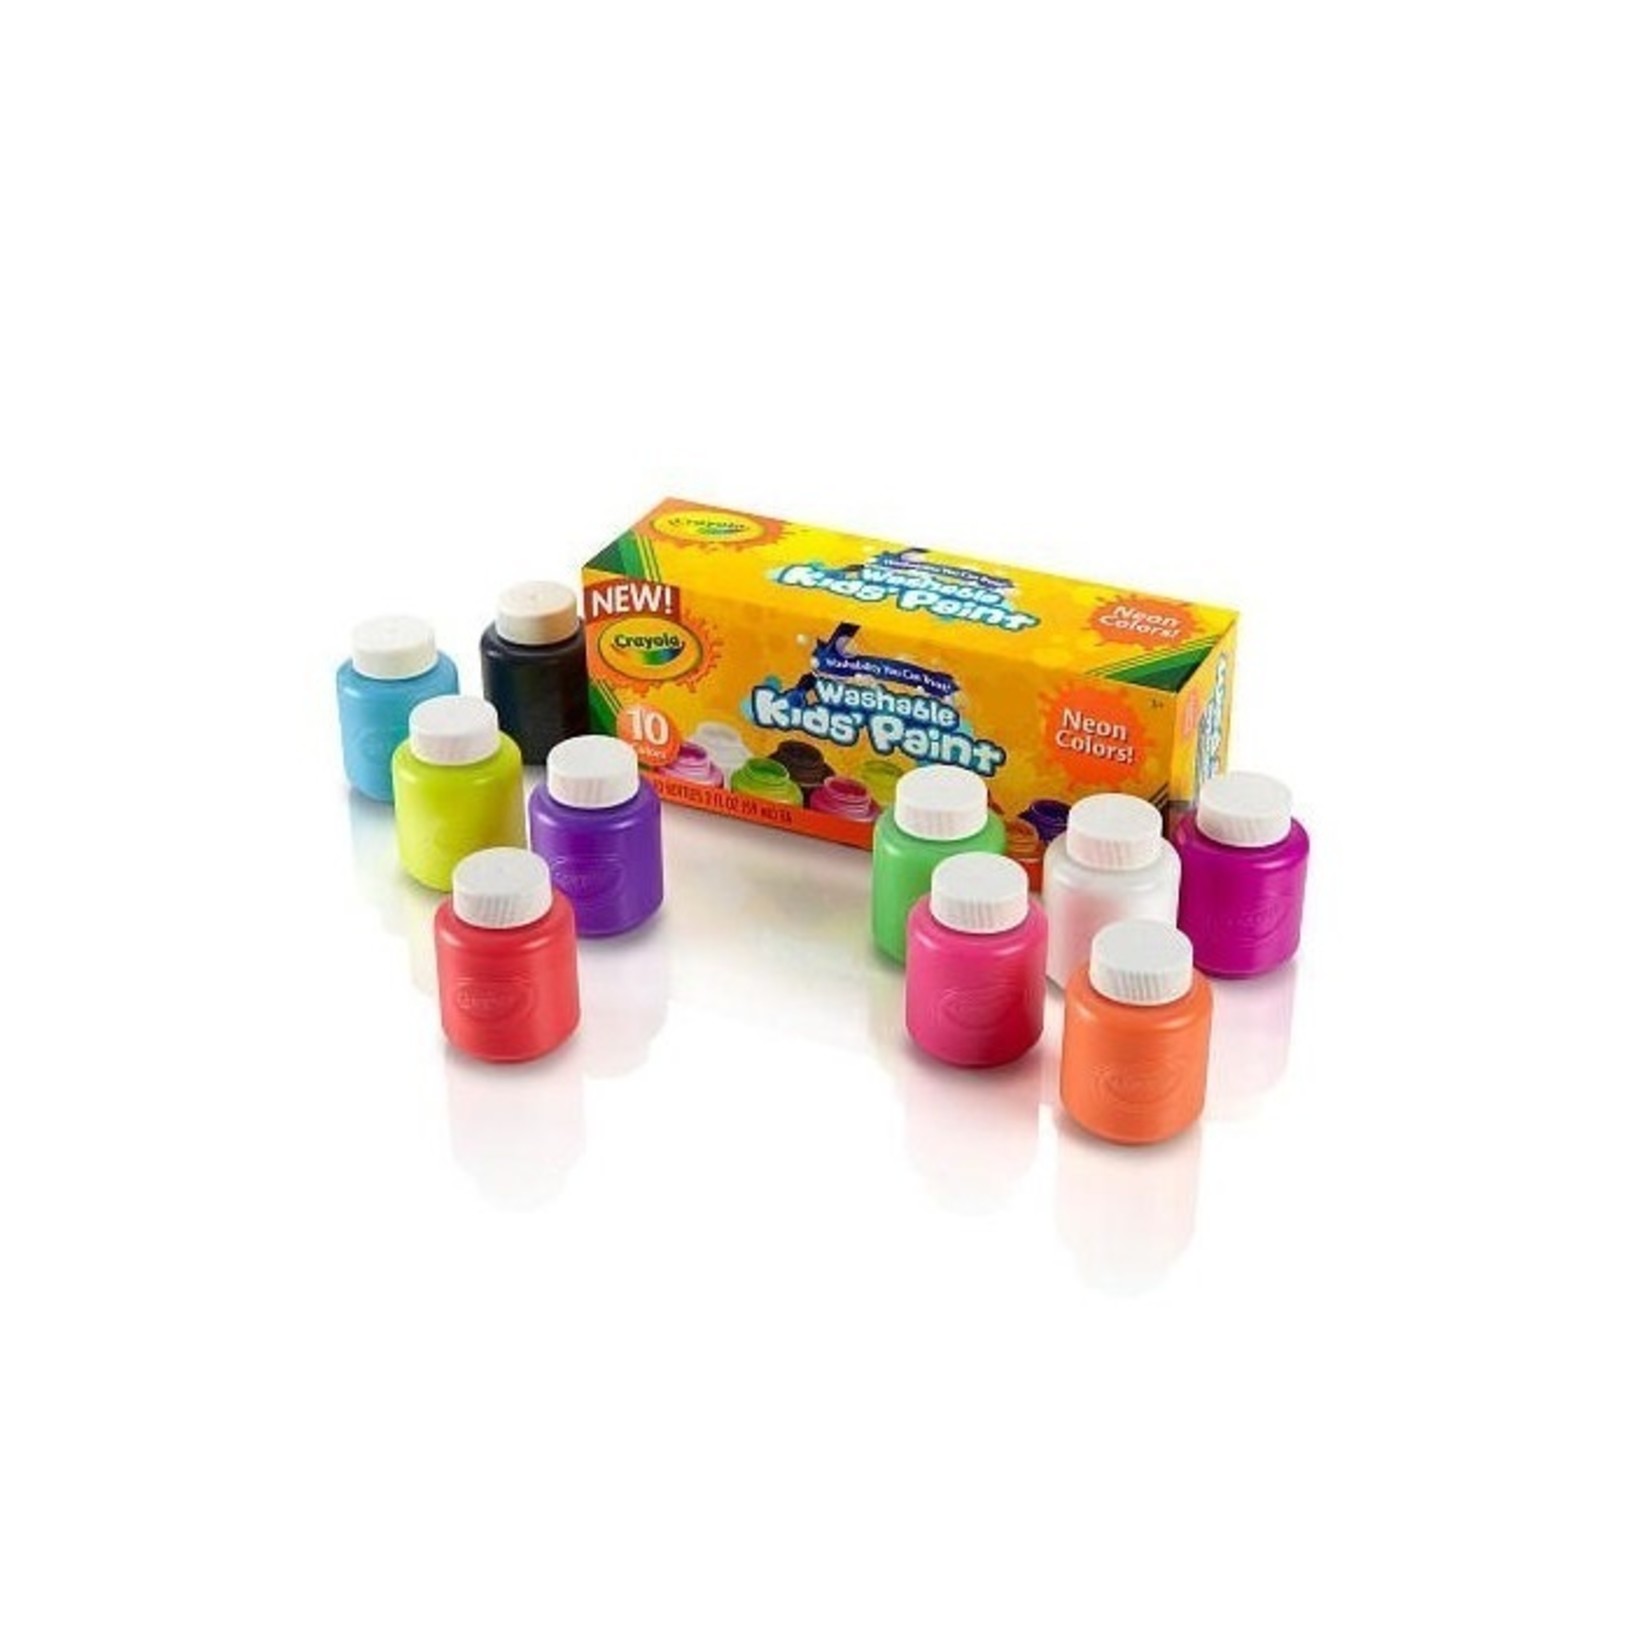 https://cdn.shoplightspeed.com/shops/647184/files/48738653/1652x1652x1/crayola-ensemble-de-peinture-lavable-10-couleurs-n.jpg